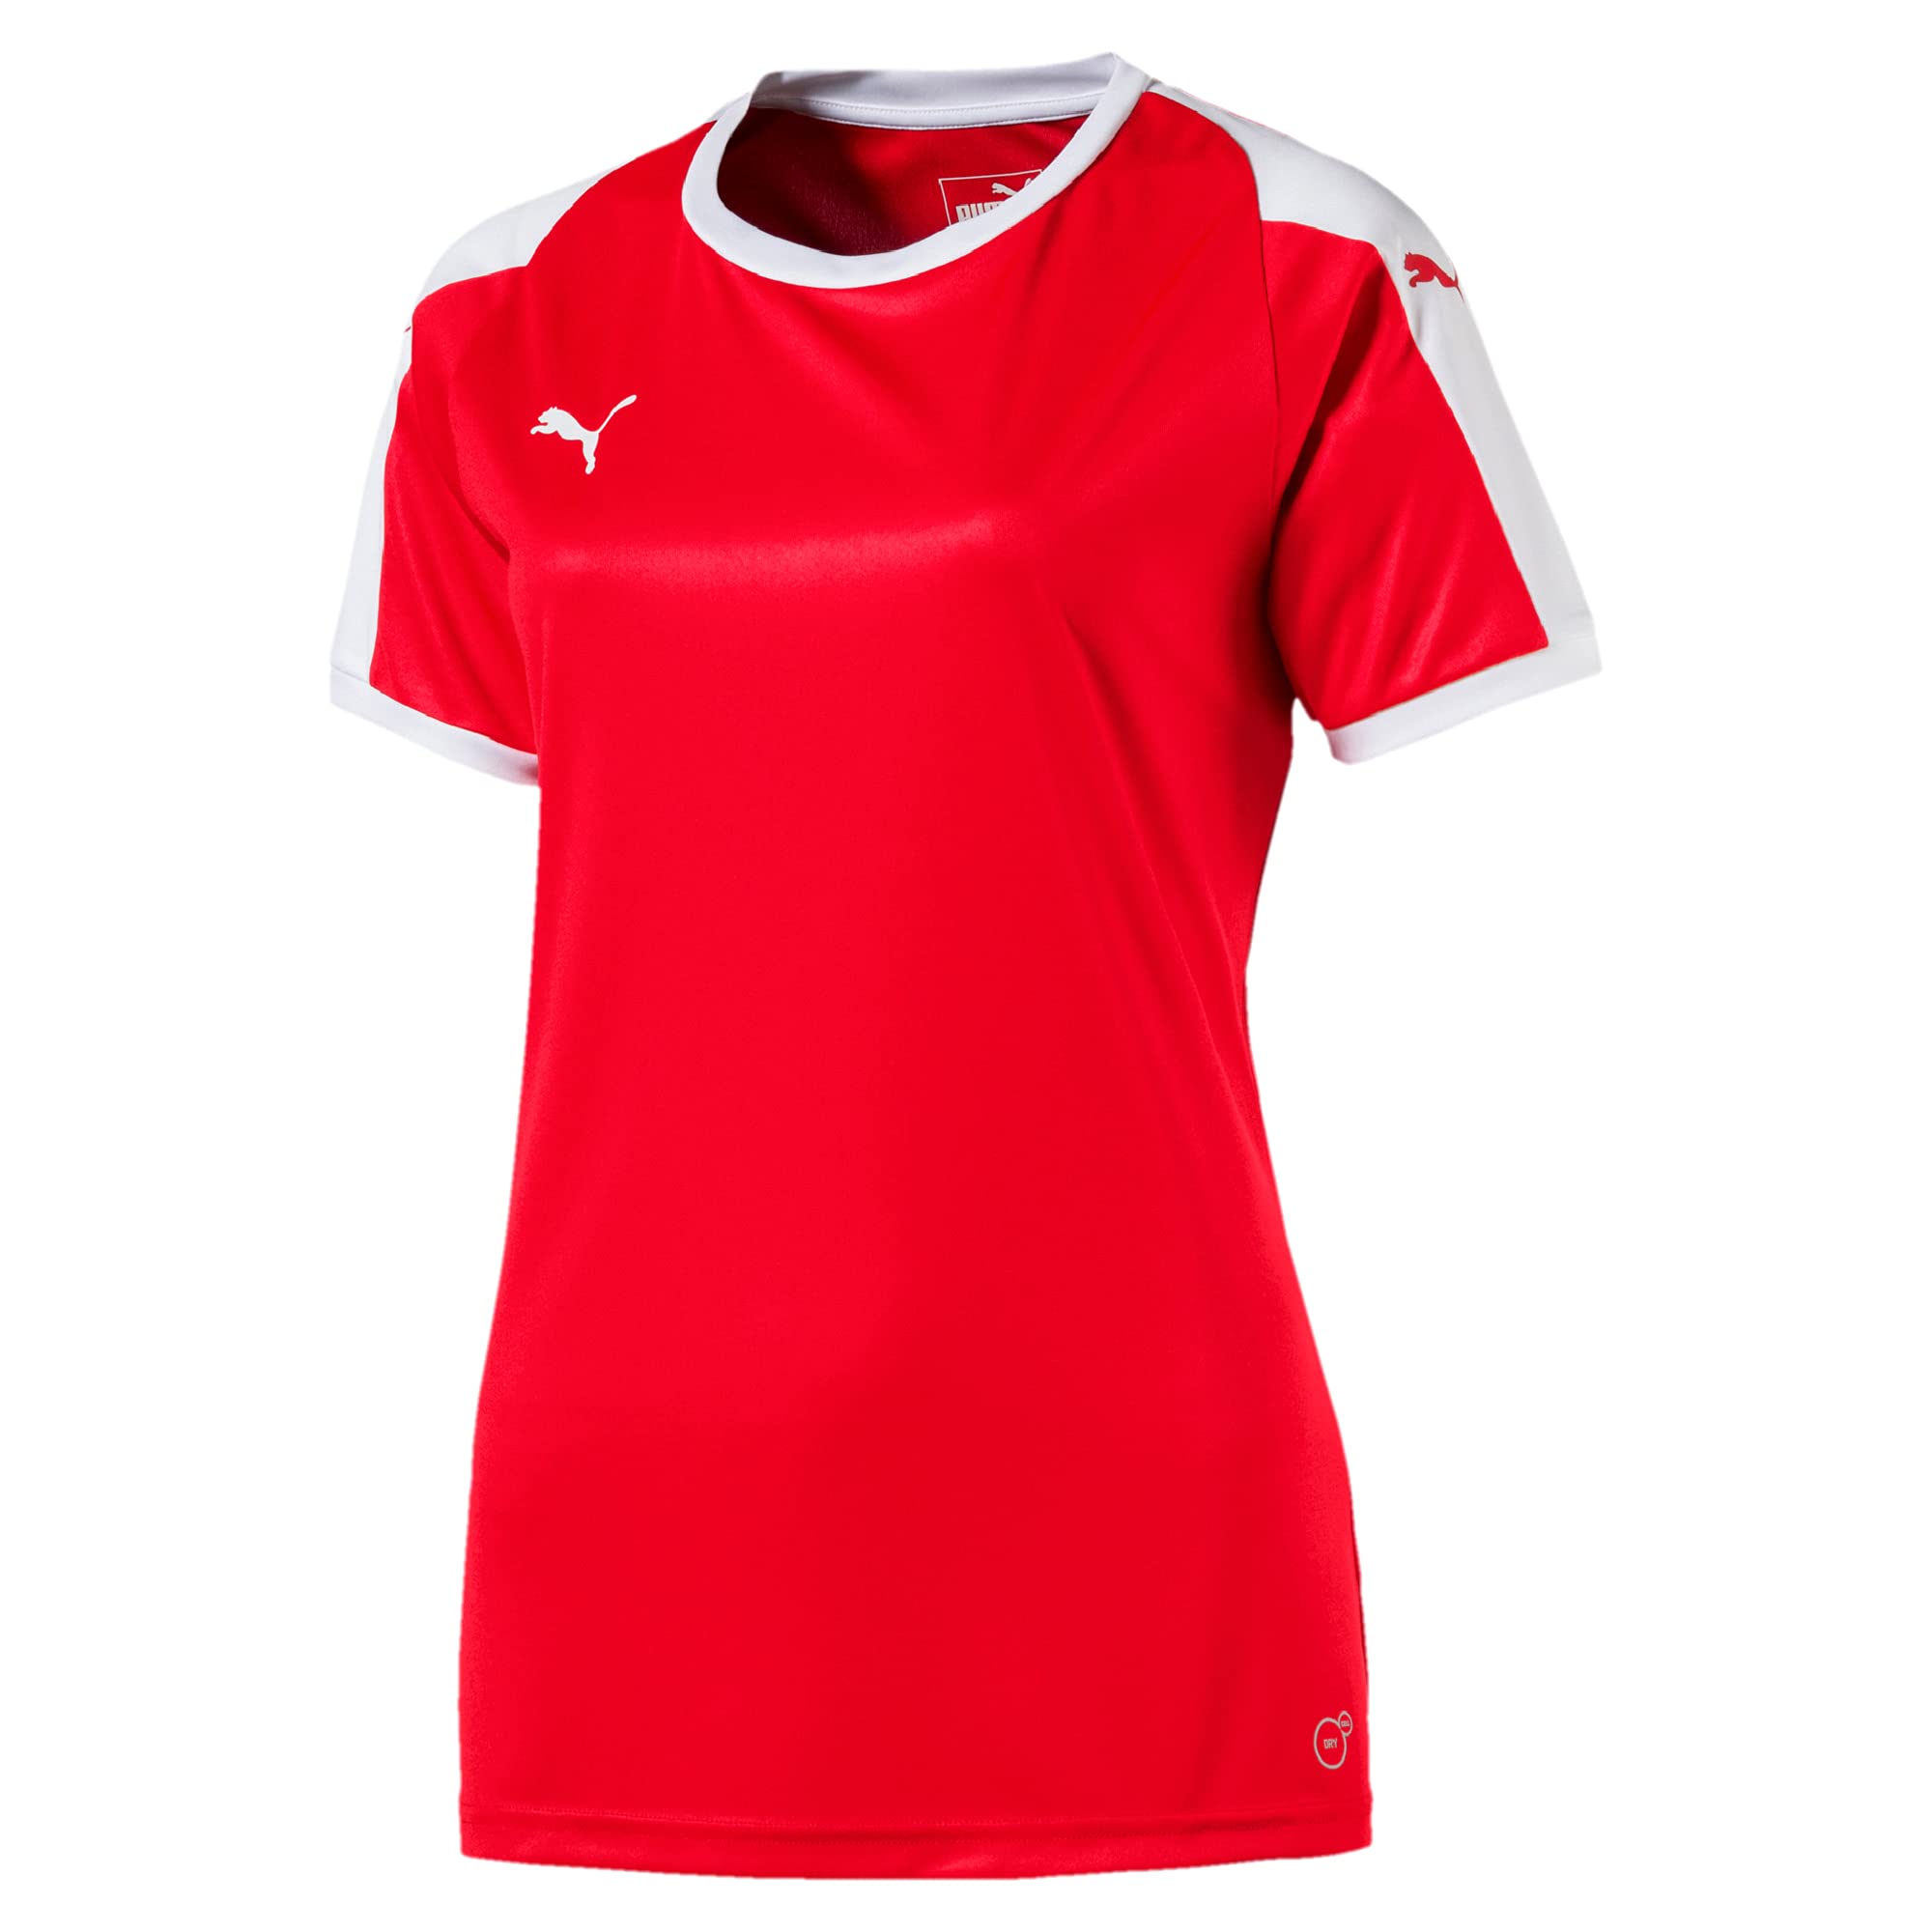 PUMA Womens Liga Jersey - Red/White - X-Small